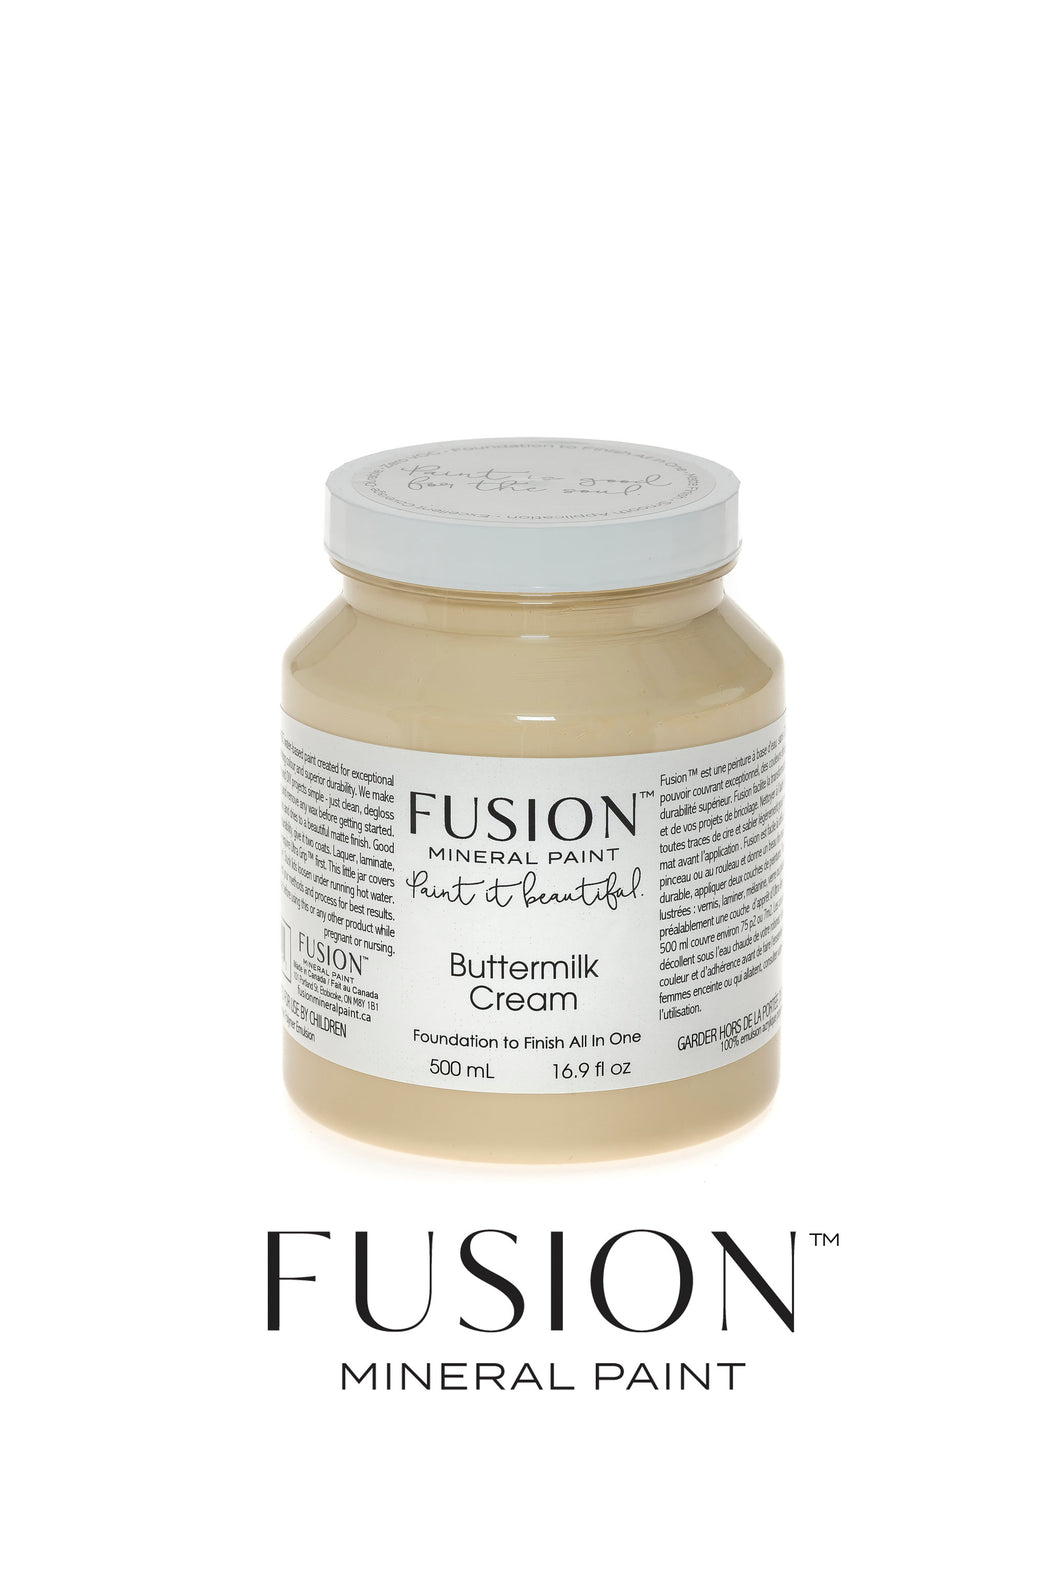 FUSION™ Mineral Paint - Buttermilk Cream 500ml